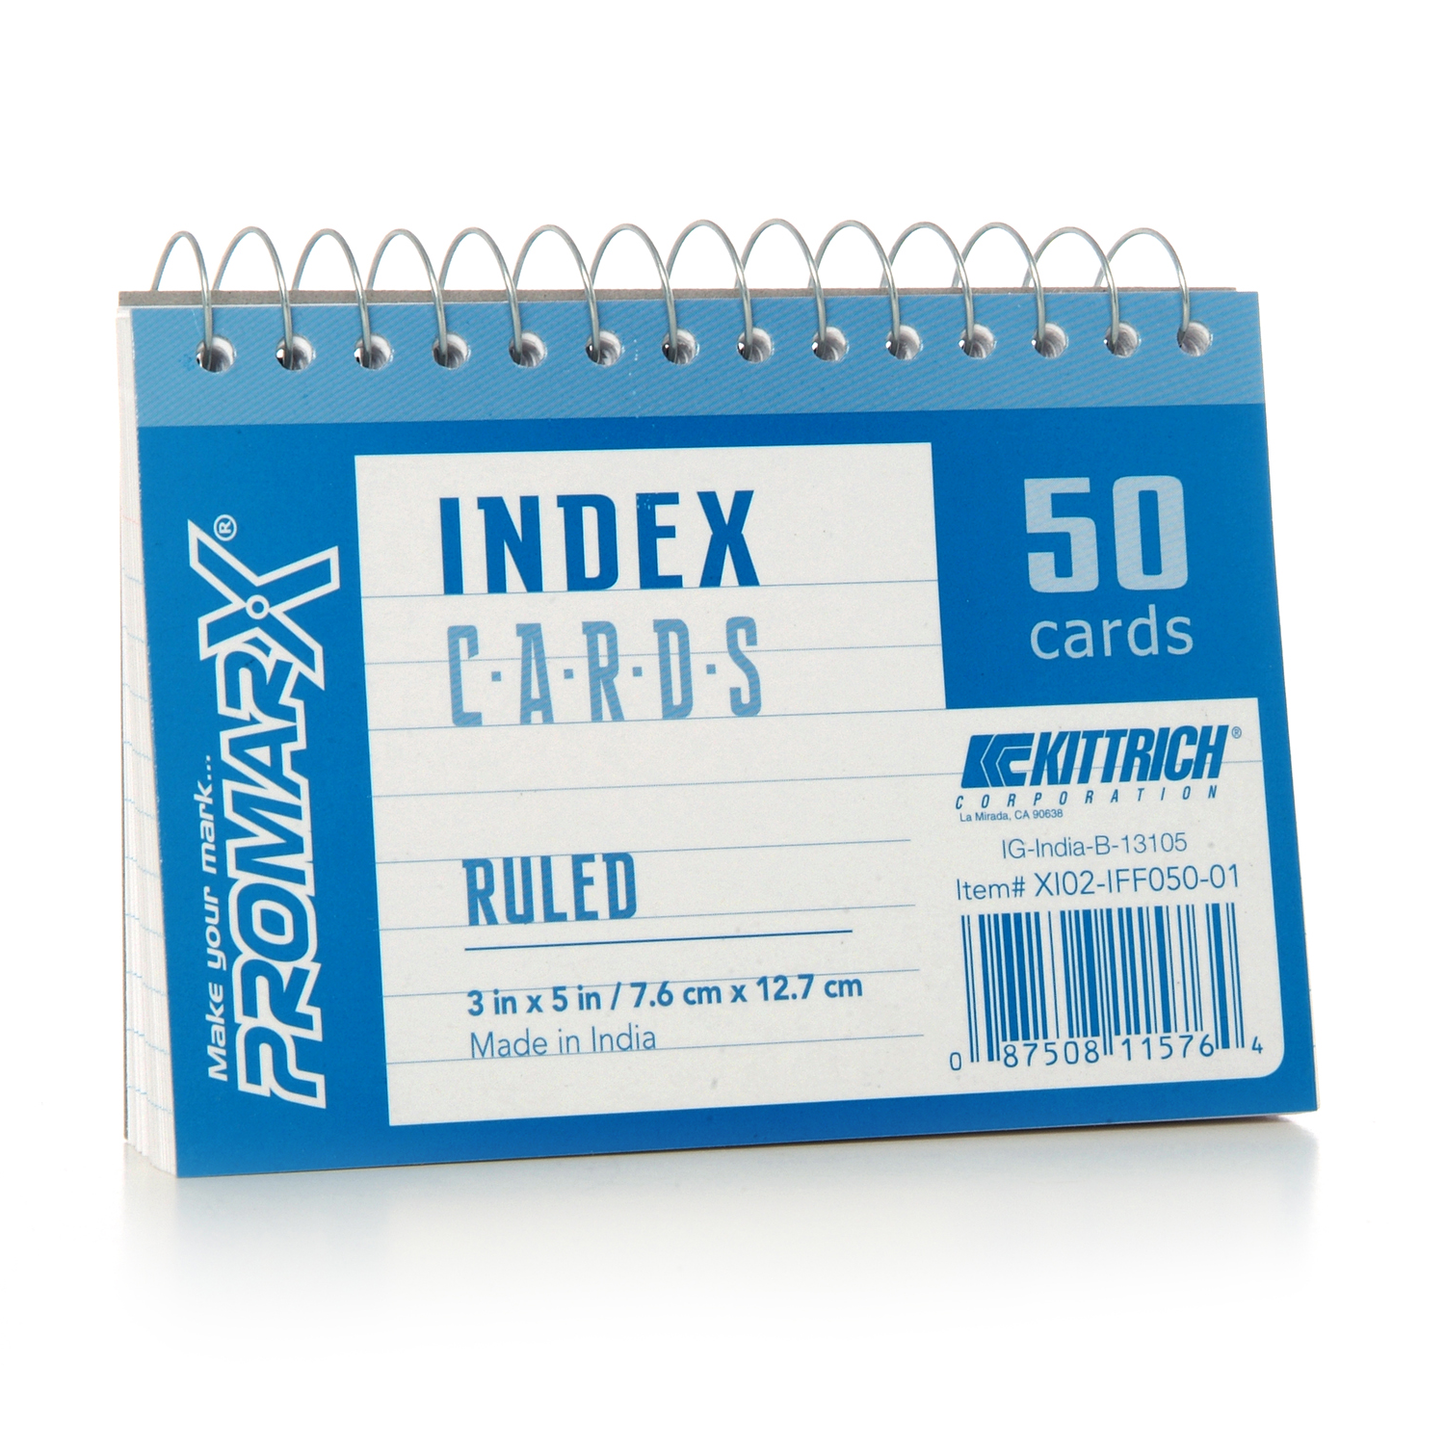 3” x 5” Ruled Spiral-Bound Index Cards